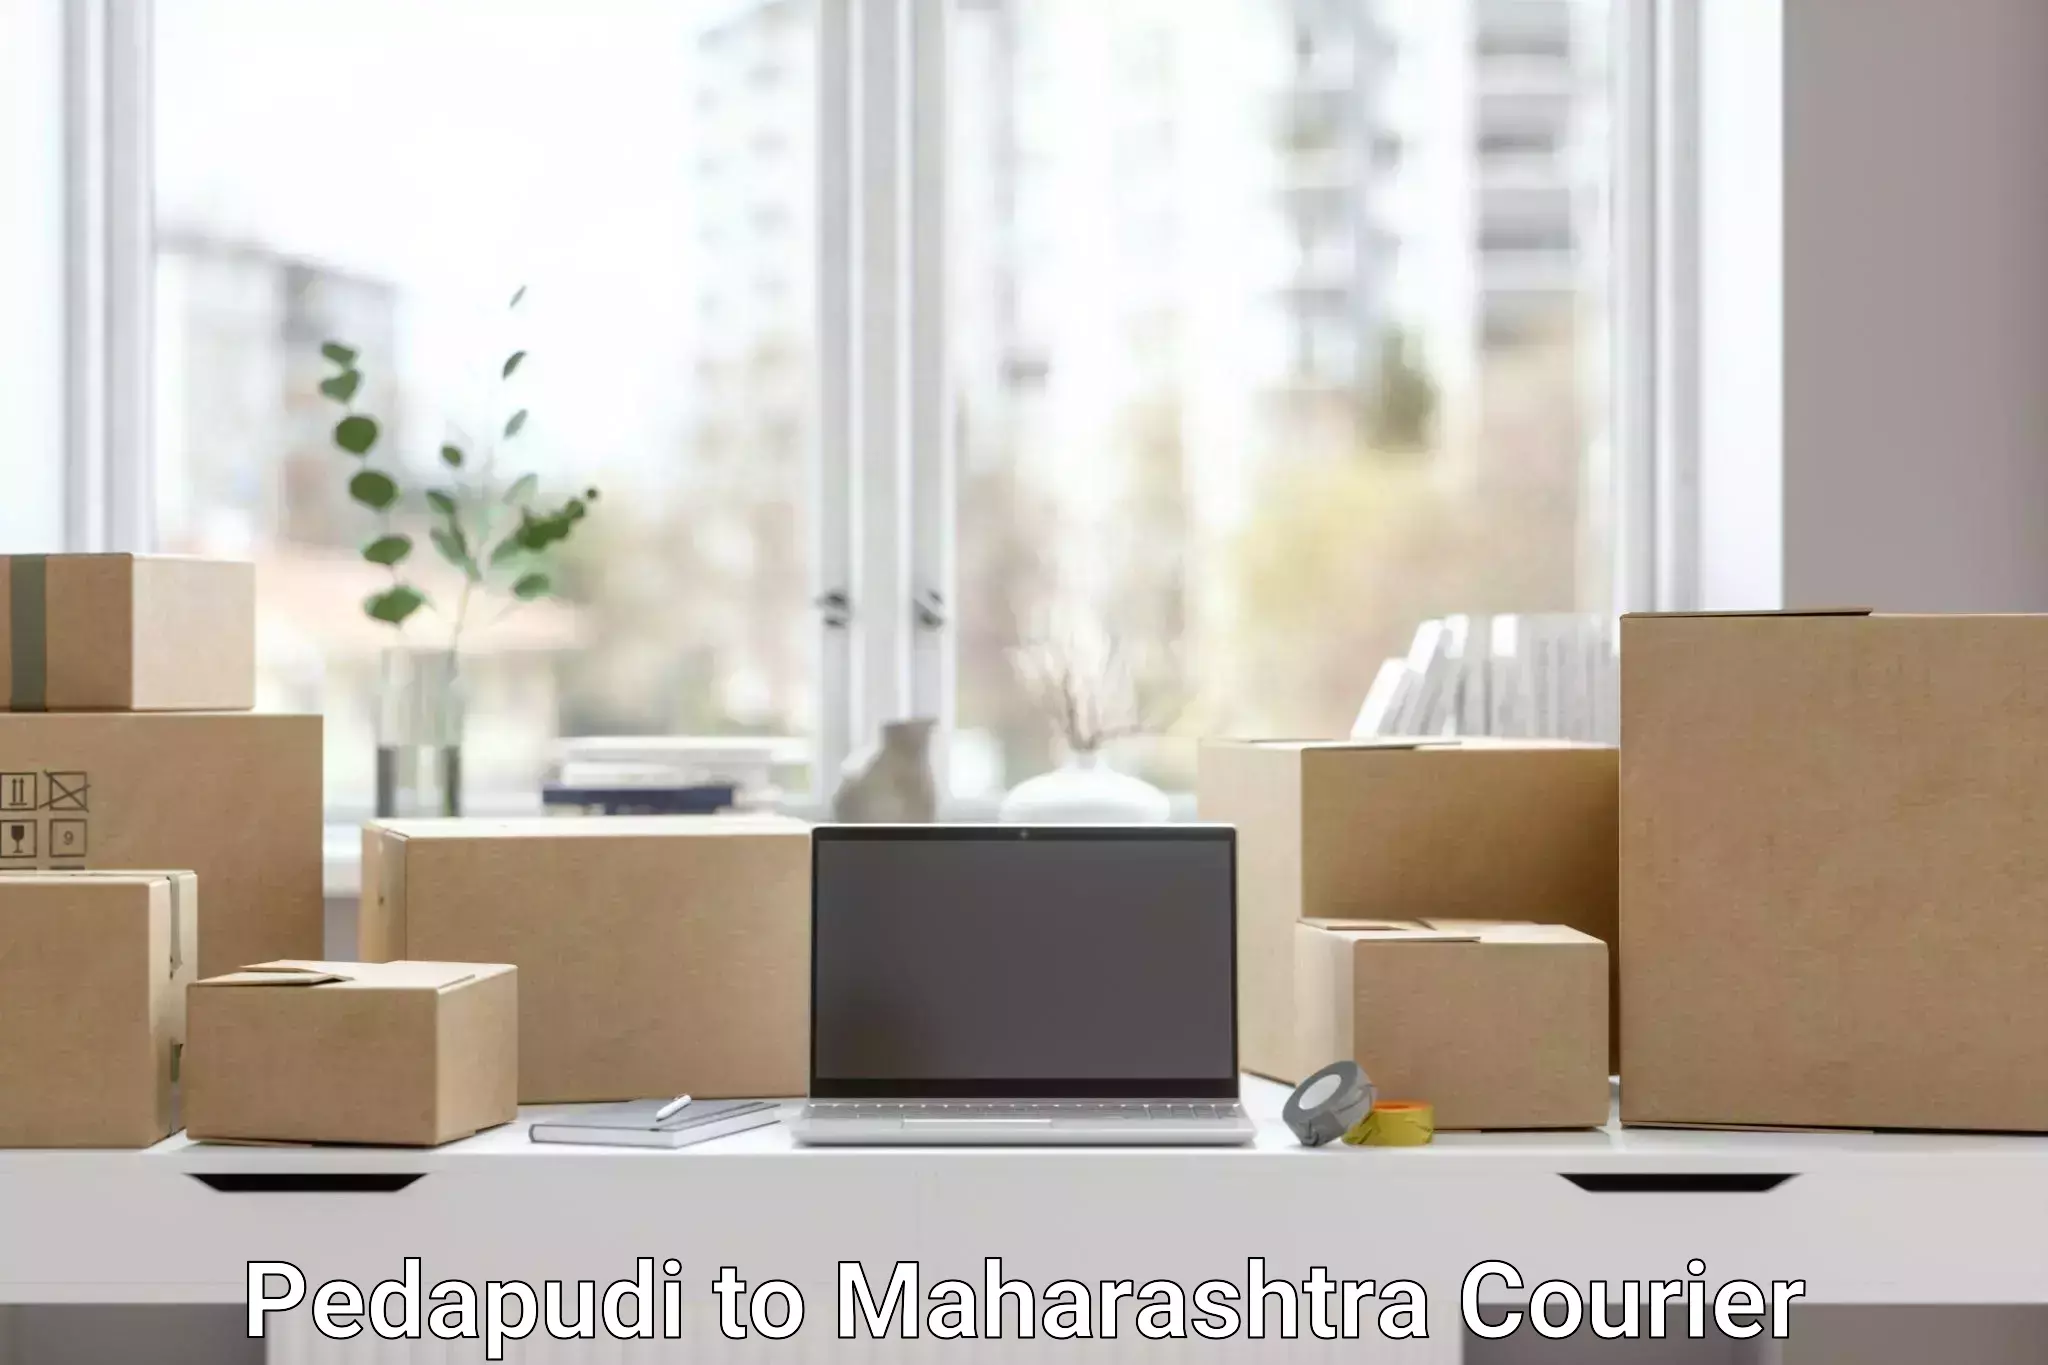 Bulk shipping discounts Pedapudi to Wagholi